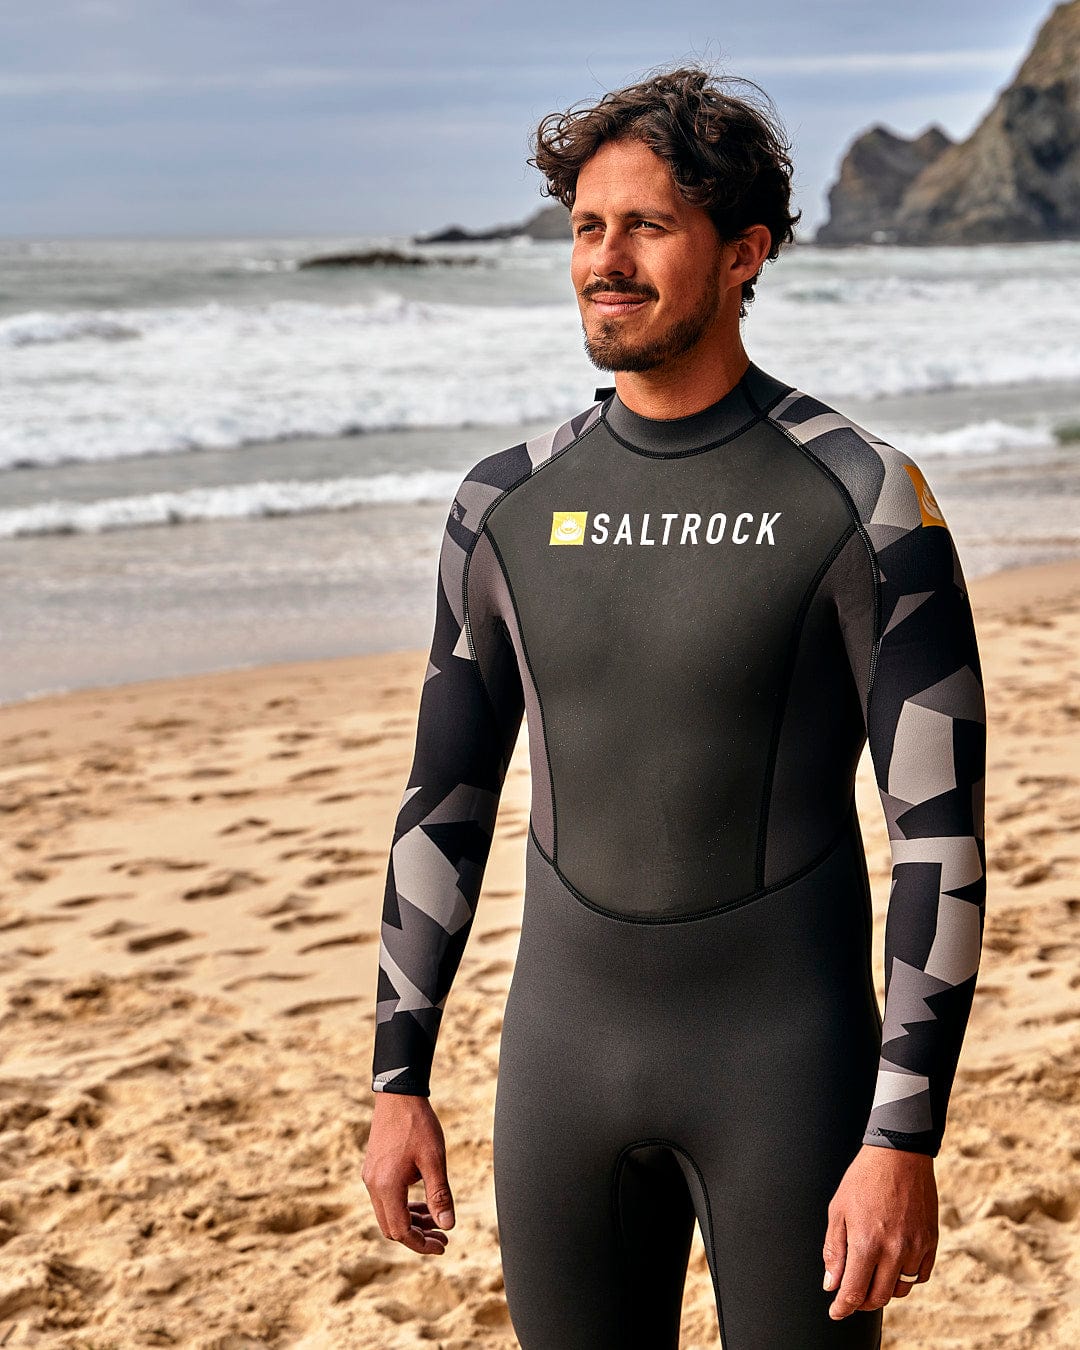 A man standing on the beach wearing a Saltrock Geo Camo - Mens 3/2 Full Wetsuit - Black.